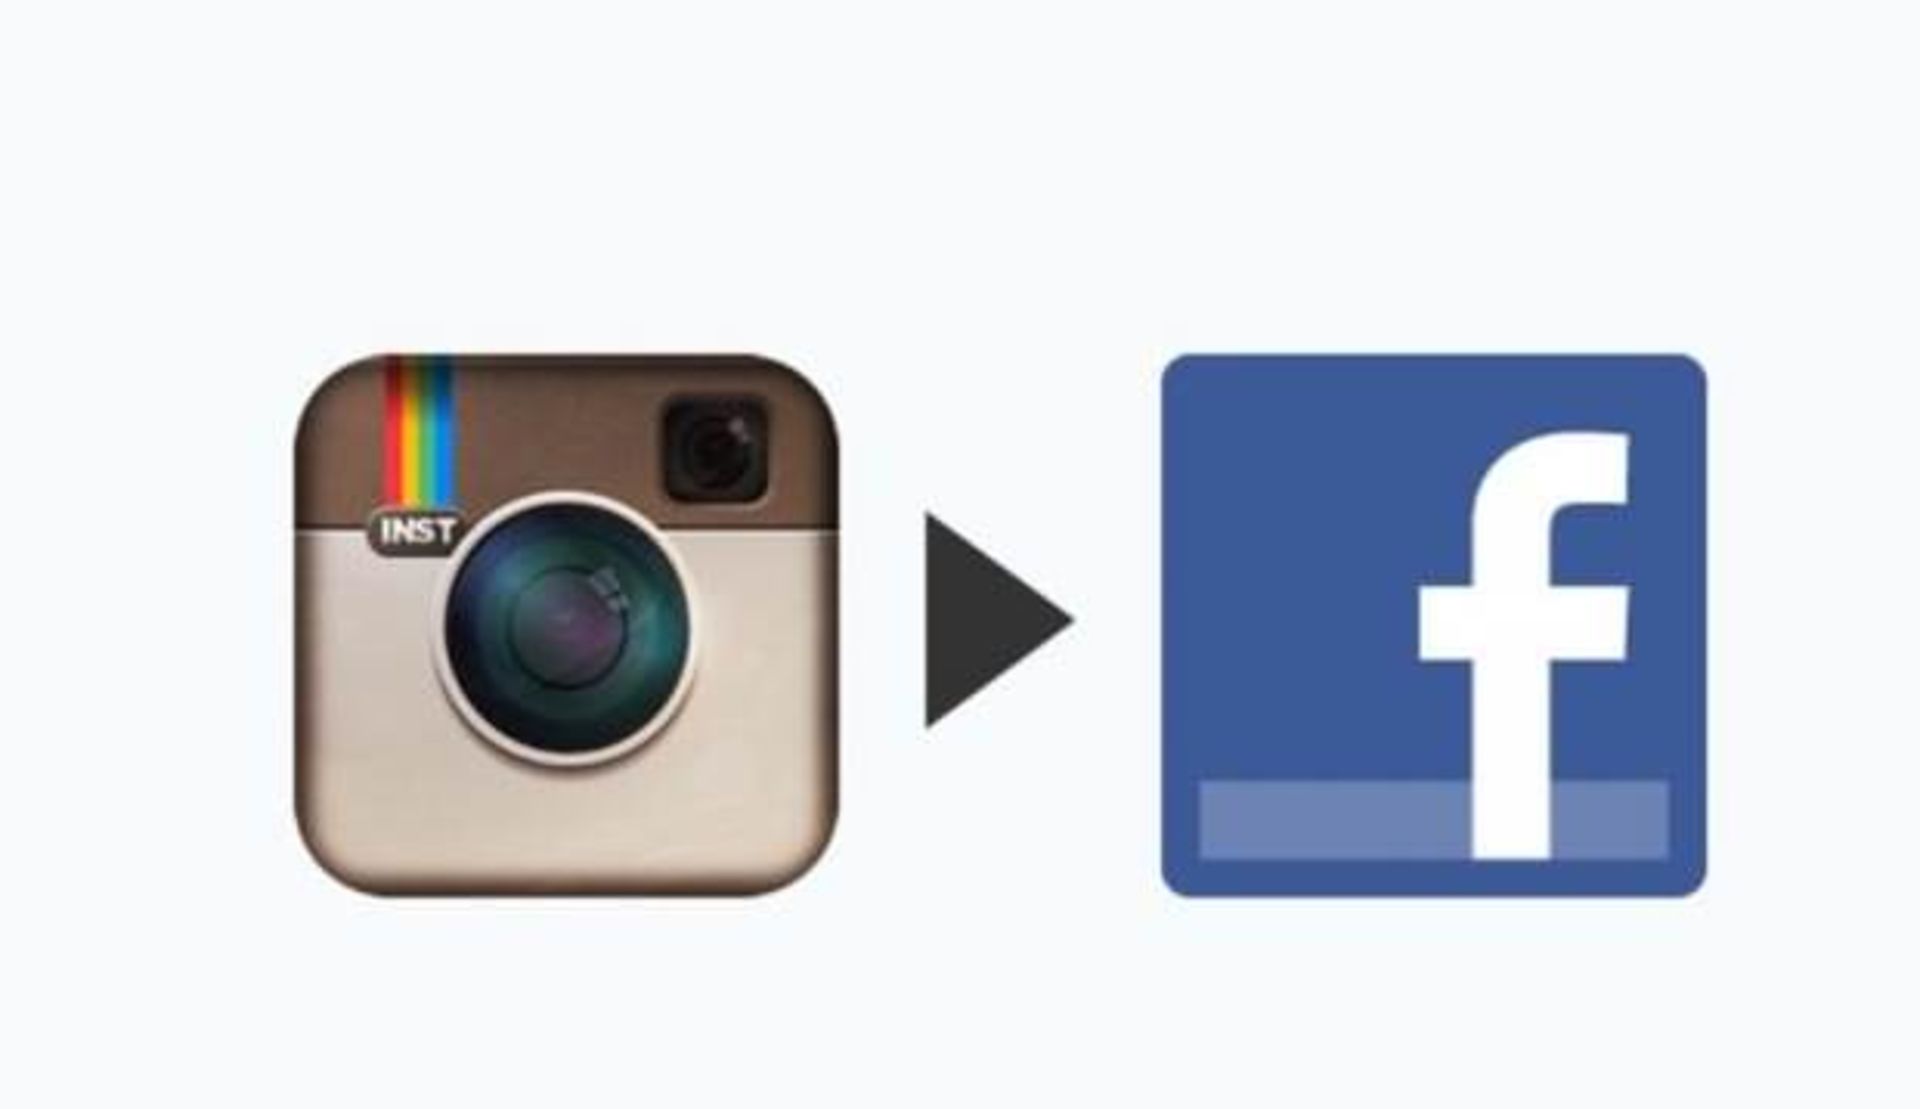 Facebook Buys Instagram